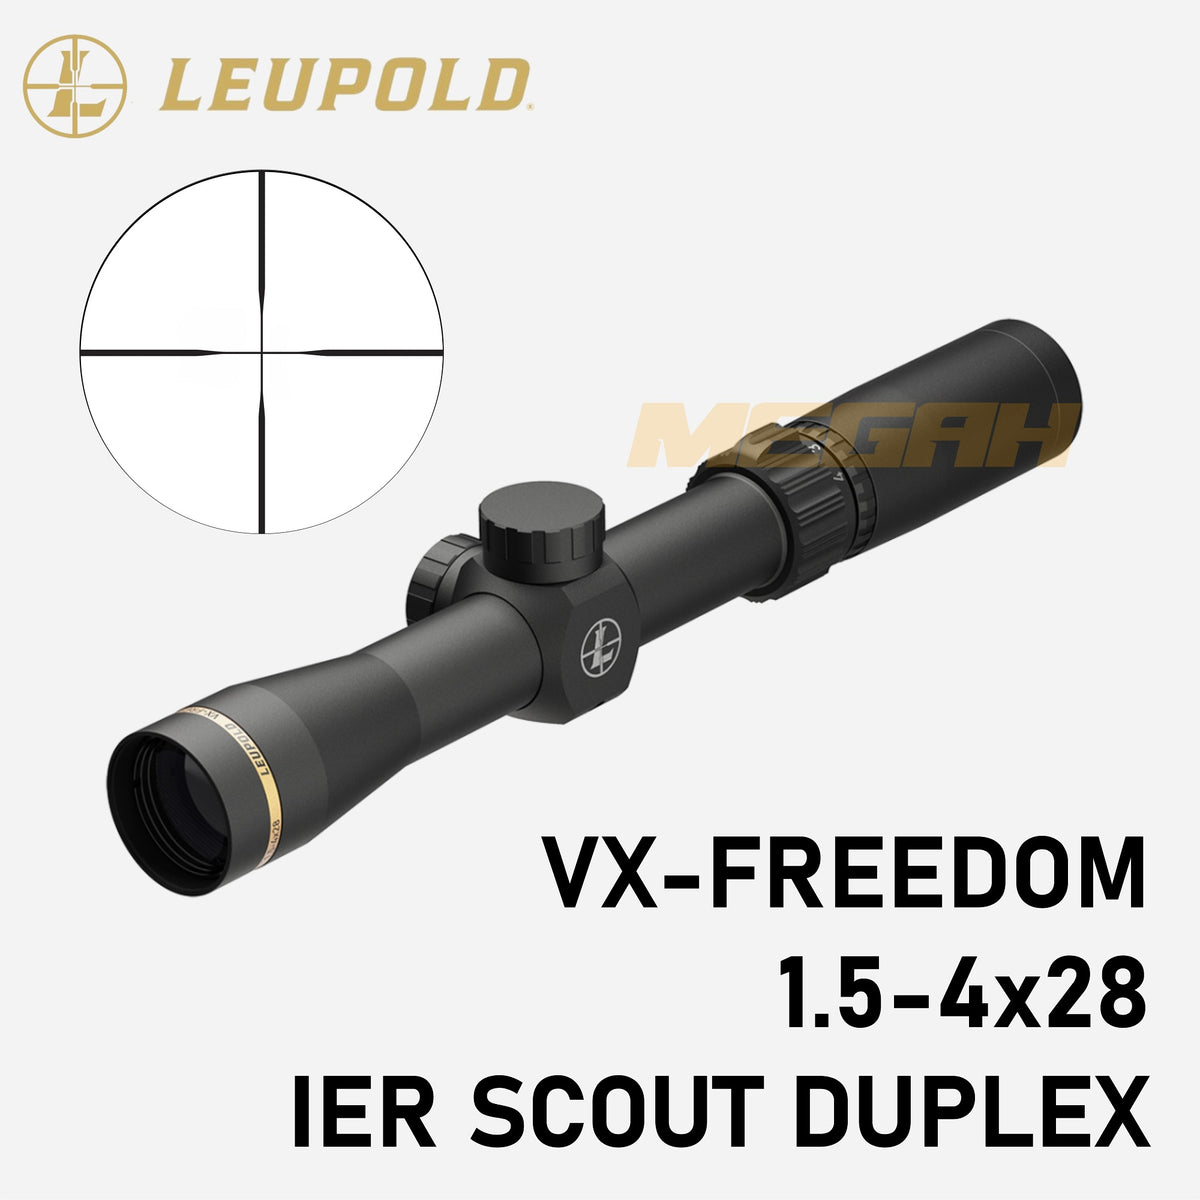 LEUPOLD VX-FREEDOM 1.5-4x28 IER SCOUT DUPLEX